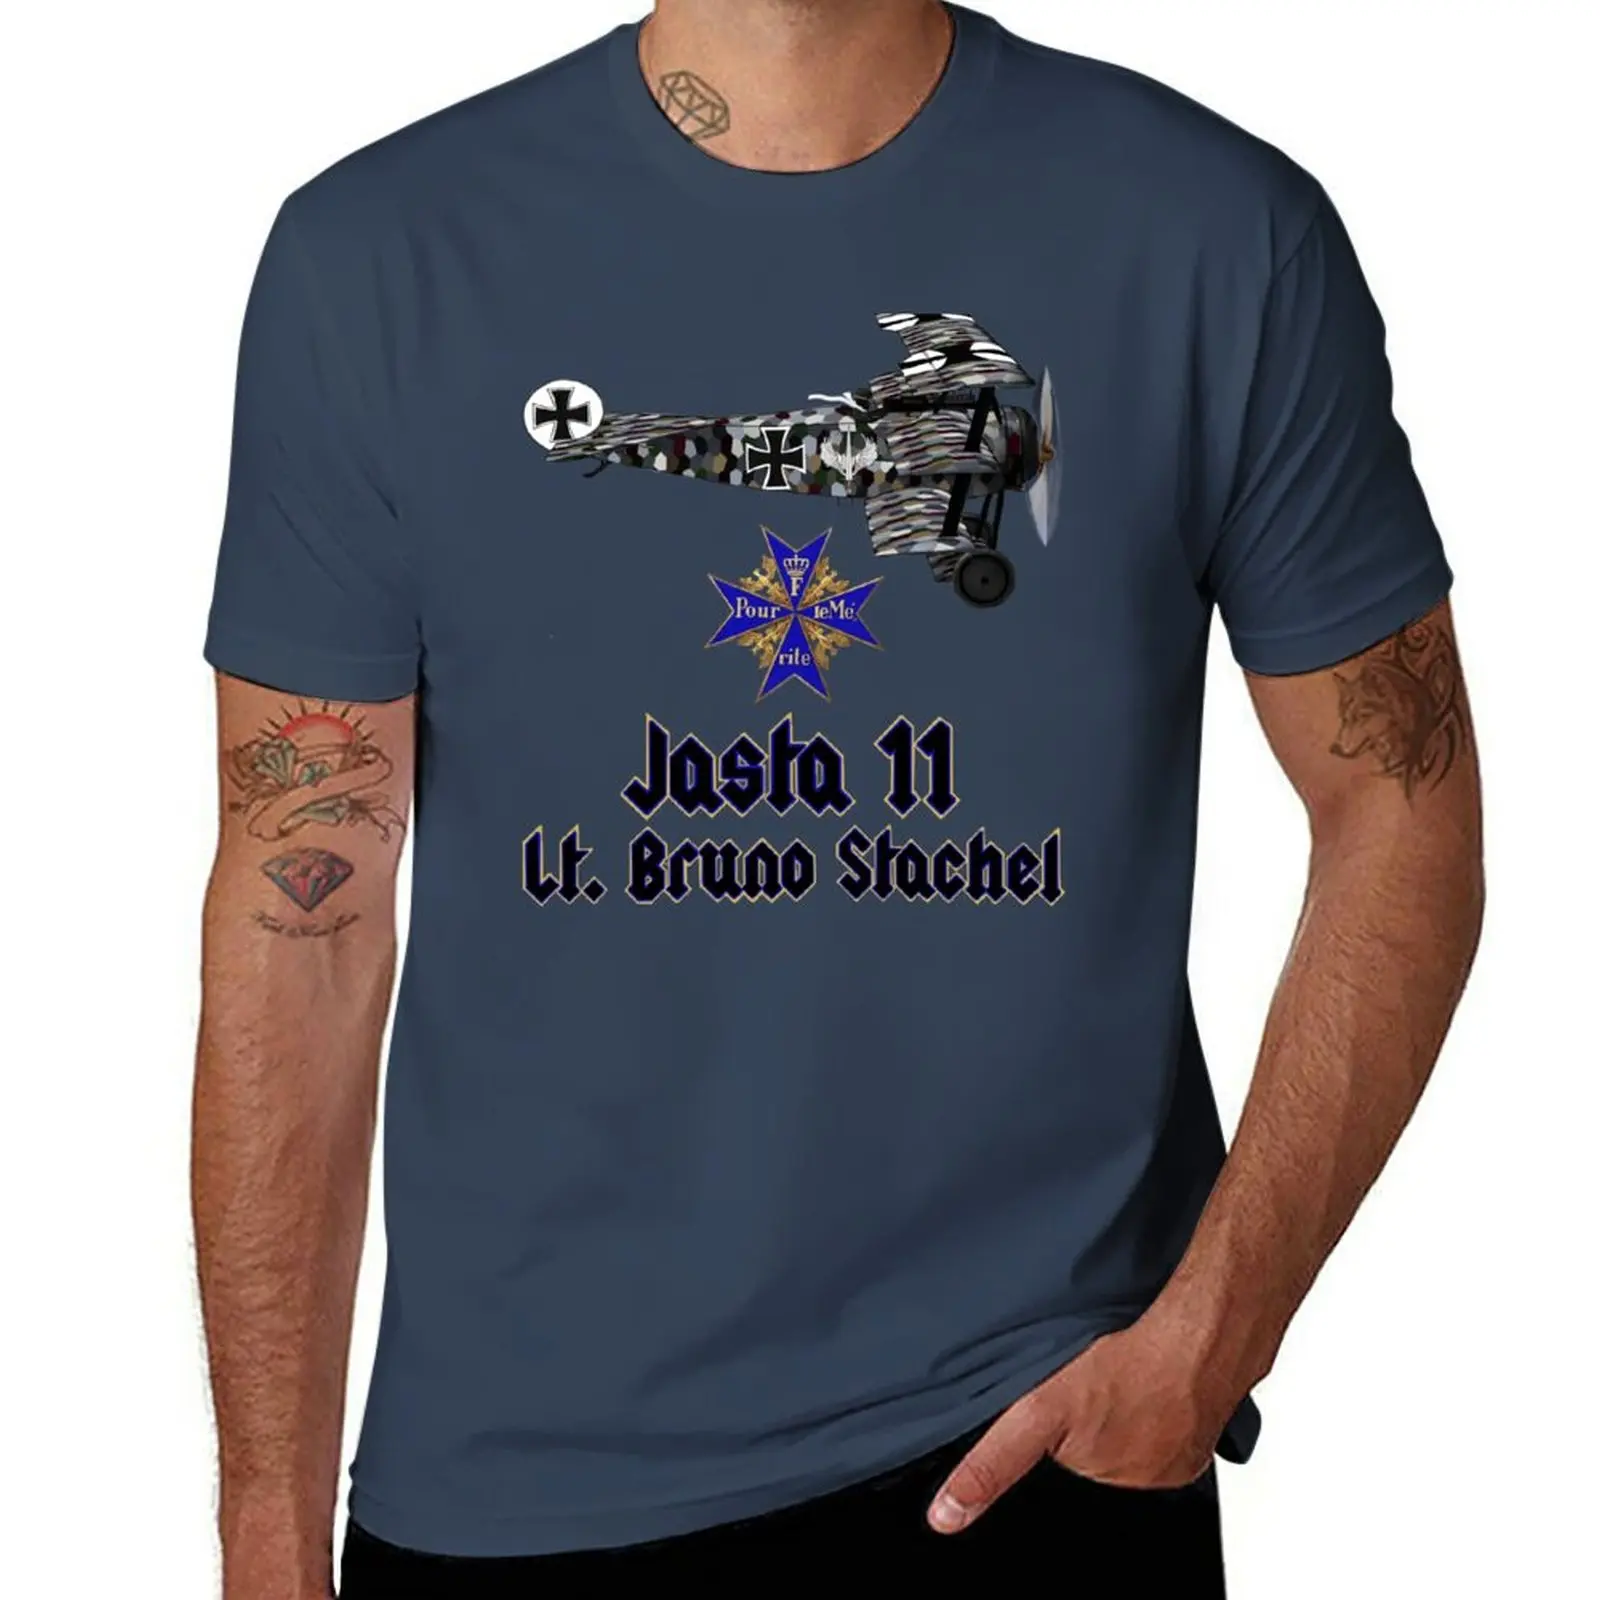 Новая футболка Jasta 11 - The Blue Max, футболки kawaii clothes, графические футболки, графические футболки, облегающие футболки для мужчин